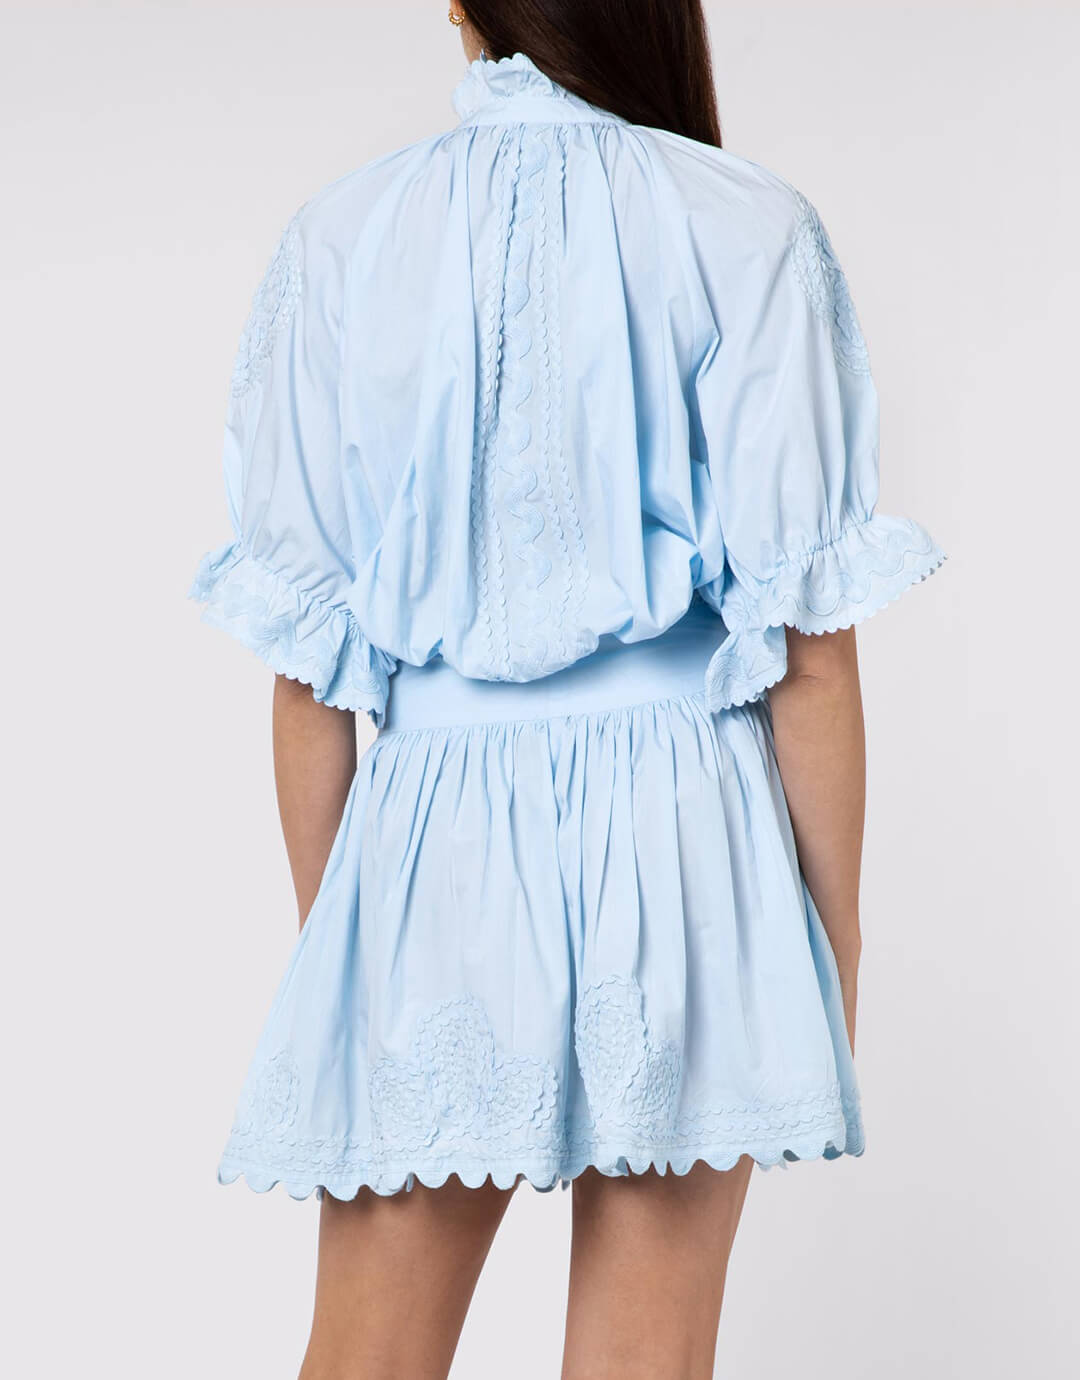 Poplin Blouson Dress with Ric-Rac Embroidery - Pale Blue - Simply Beach UK